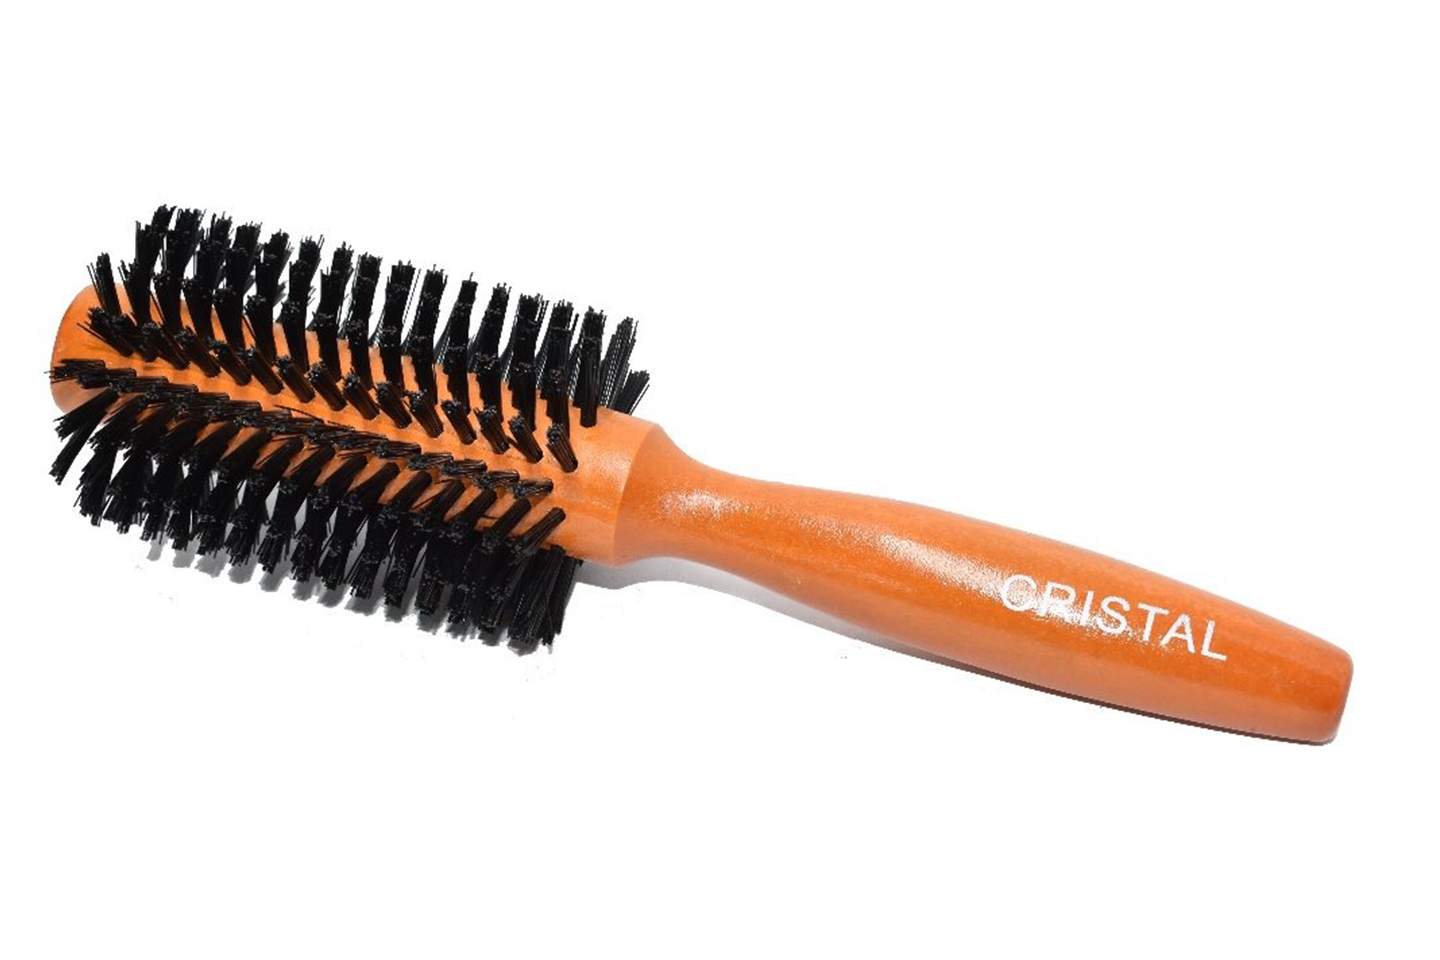 Hombres: aprende a cepillar el cabello de forma correcta - Métodos Para  Ligar